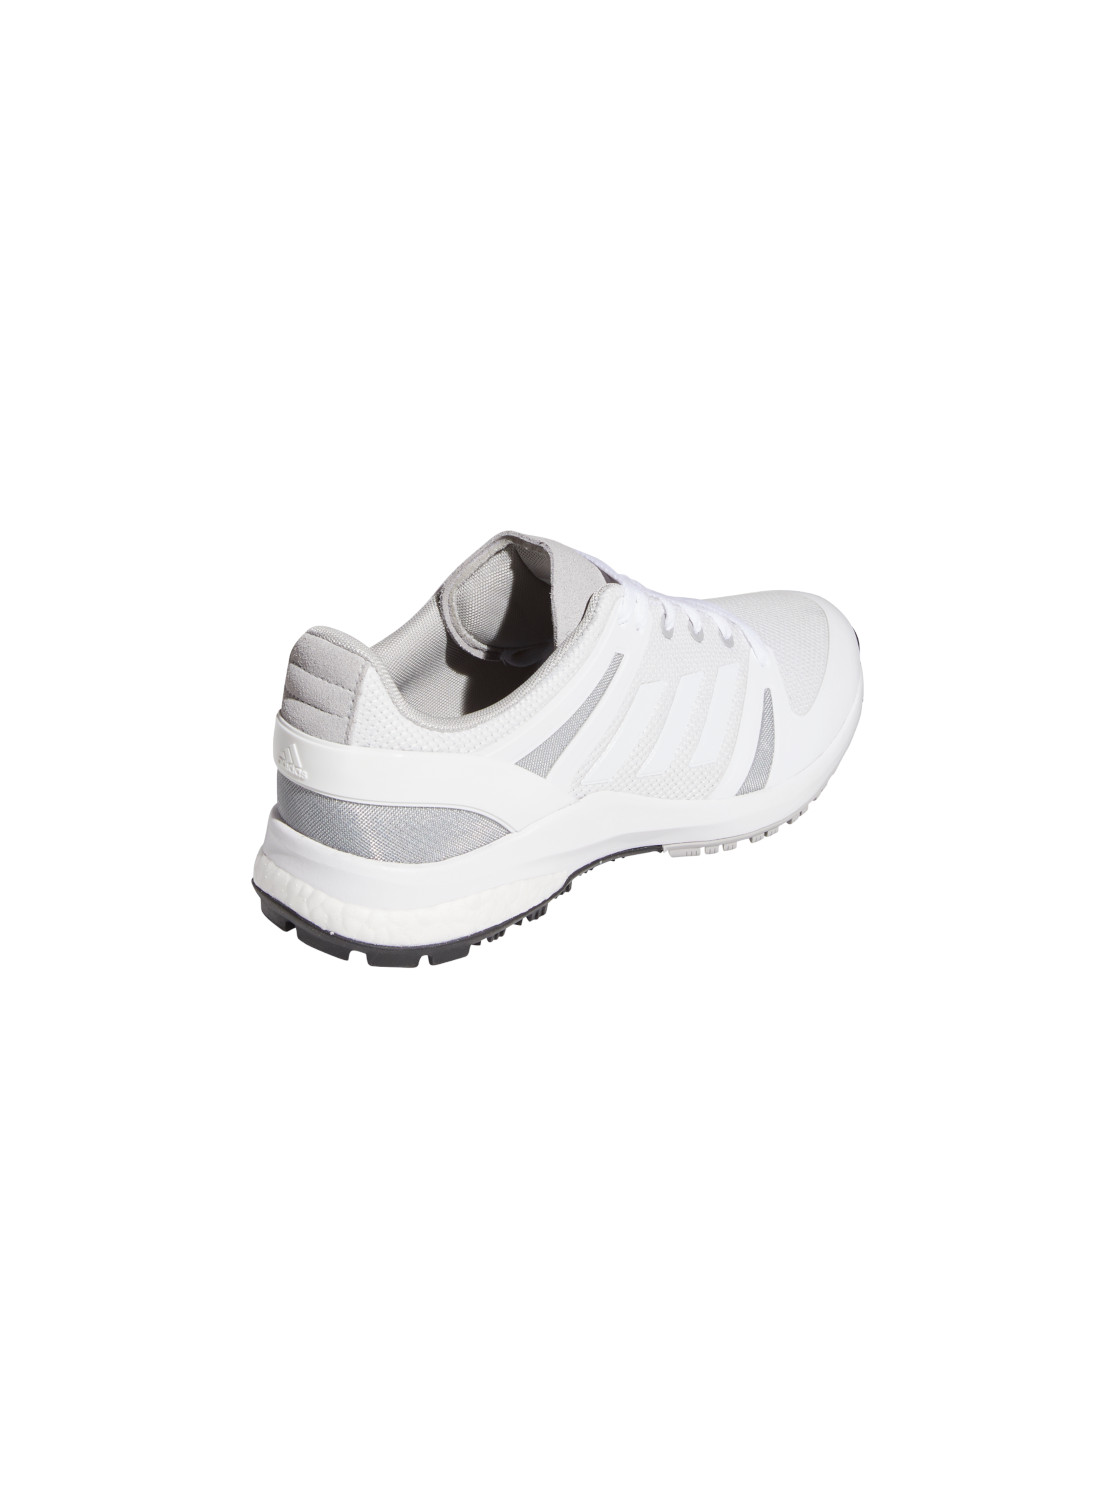 Adidas EQT-SL Golfschuhe weiß